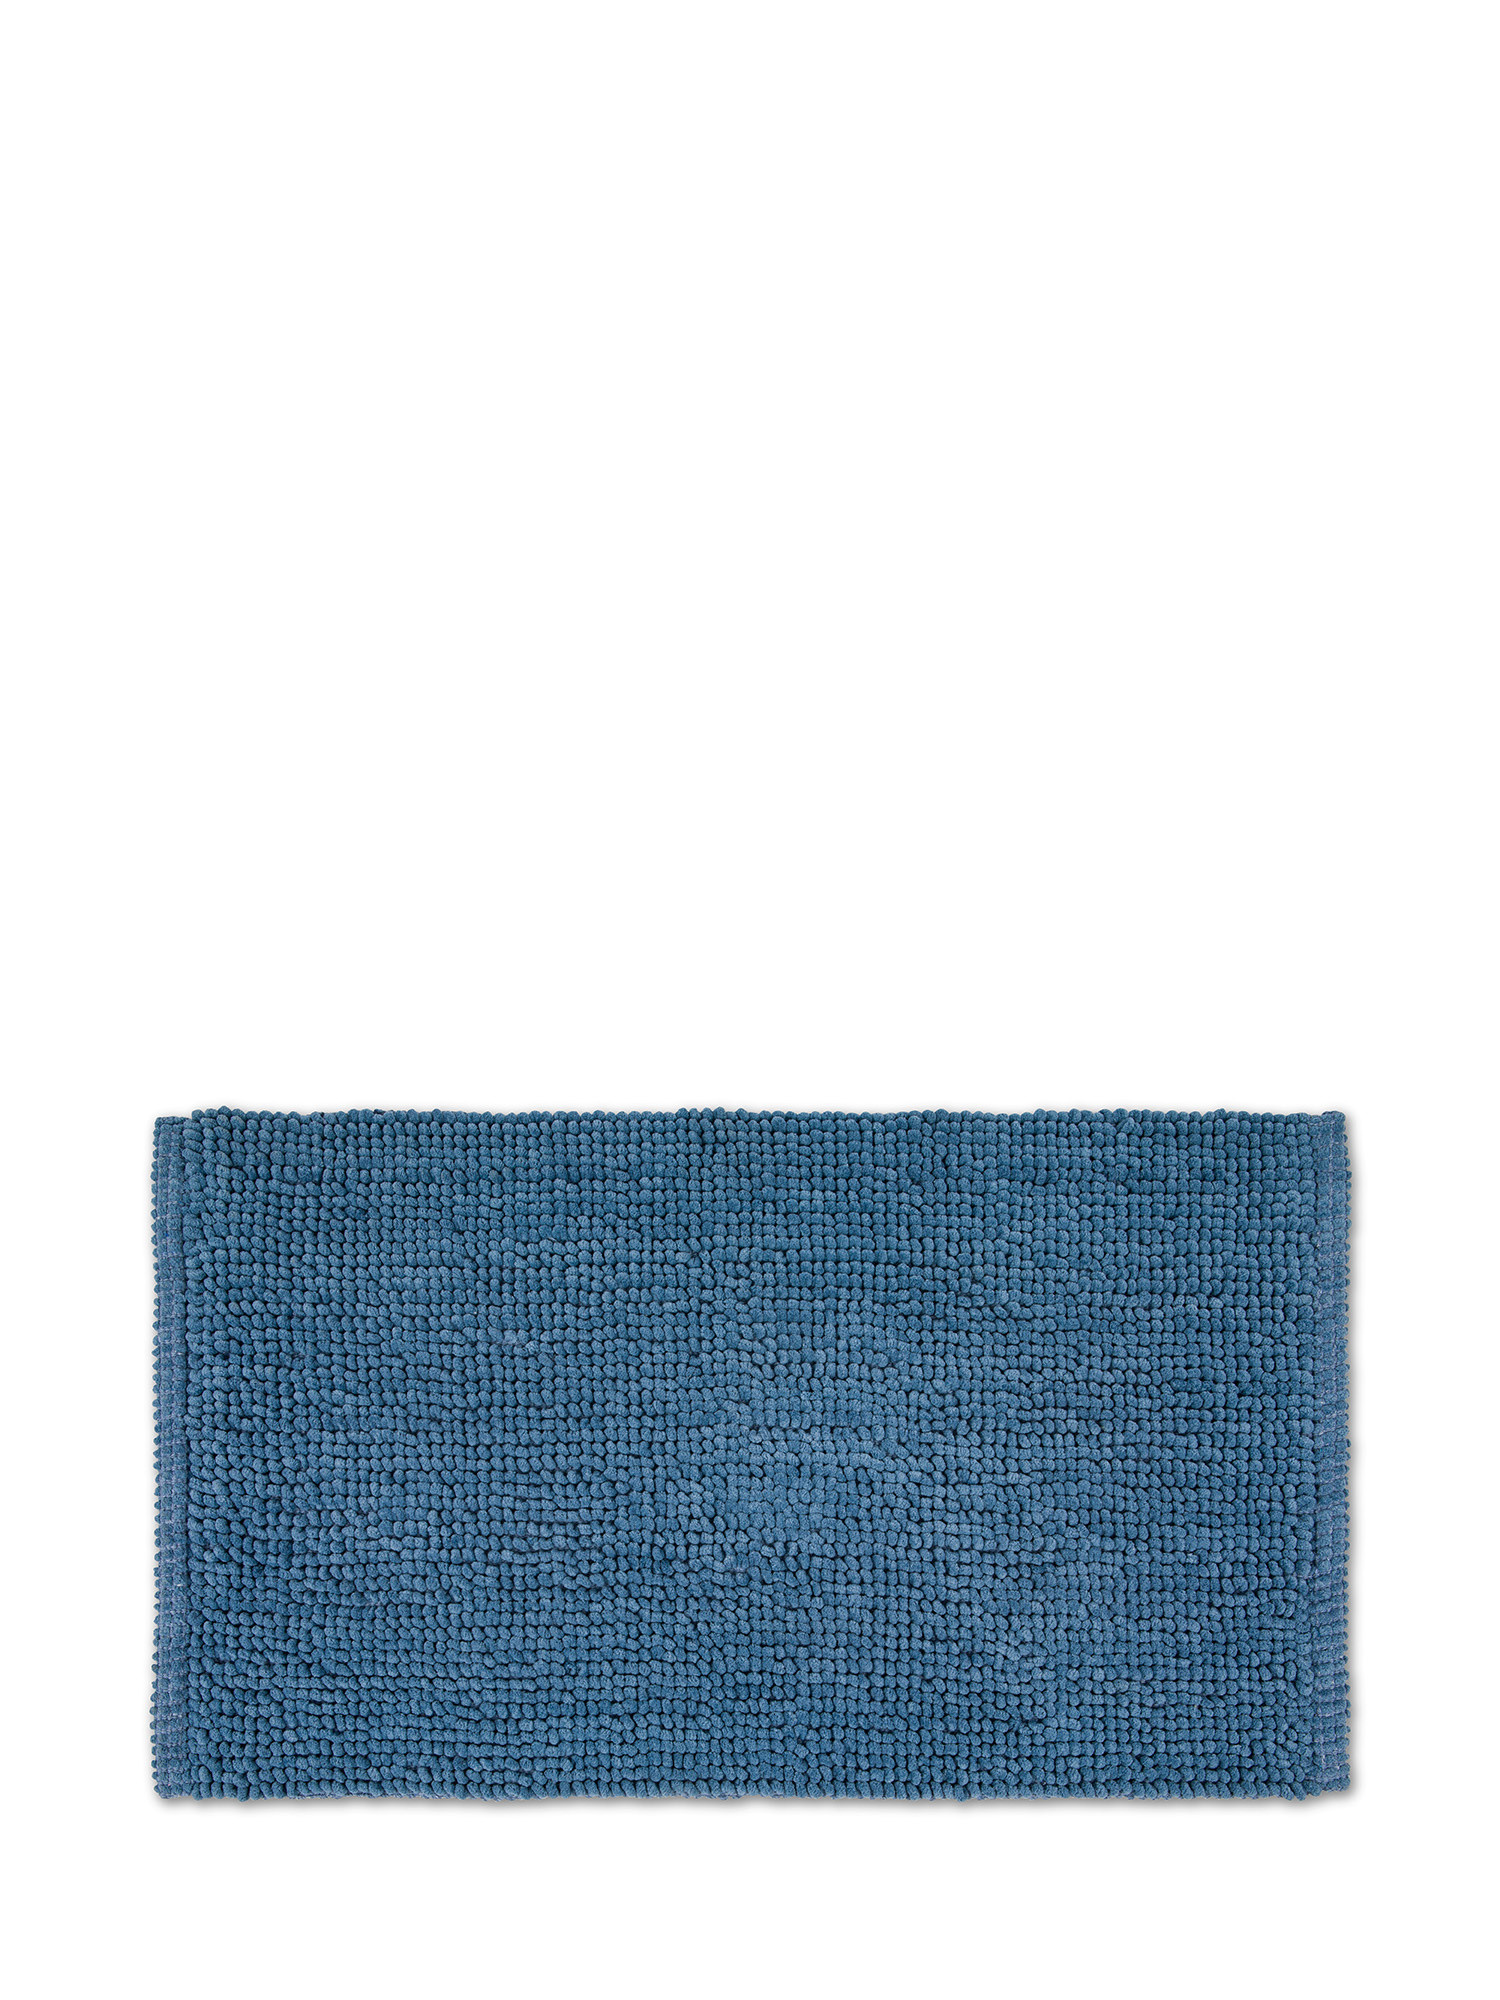 Tappeto bagno in ciniglia effetto shaggy, Blu, large image number 0